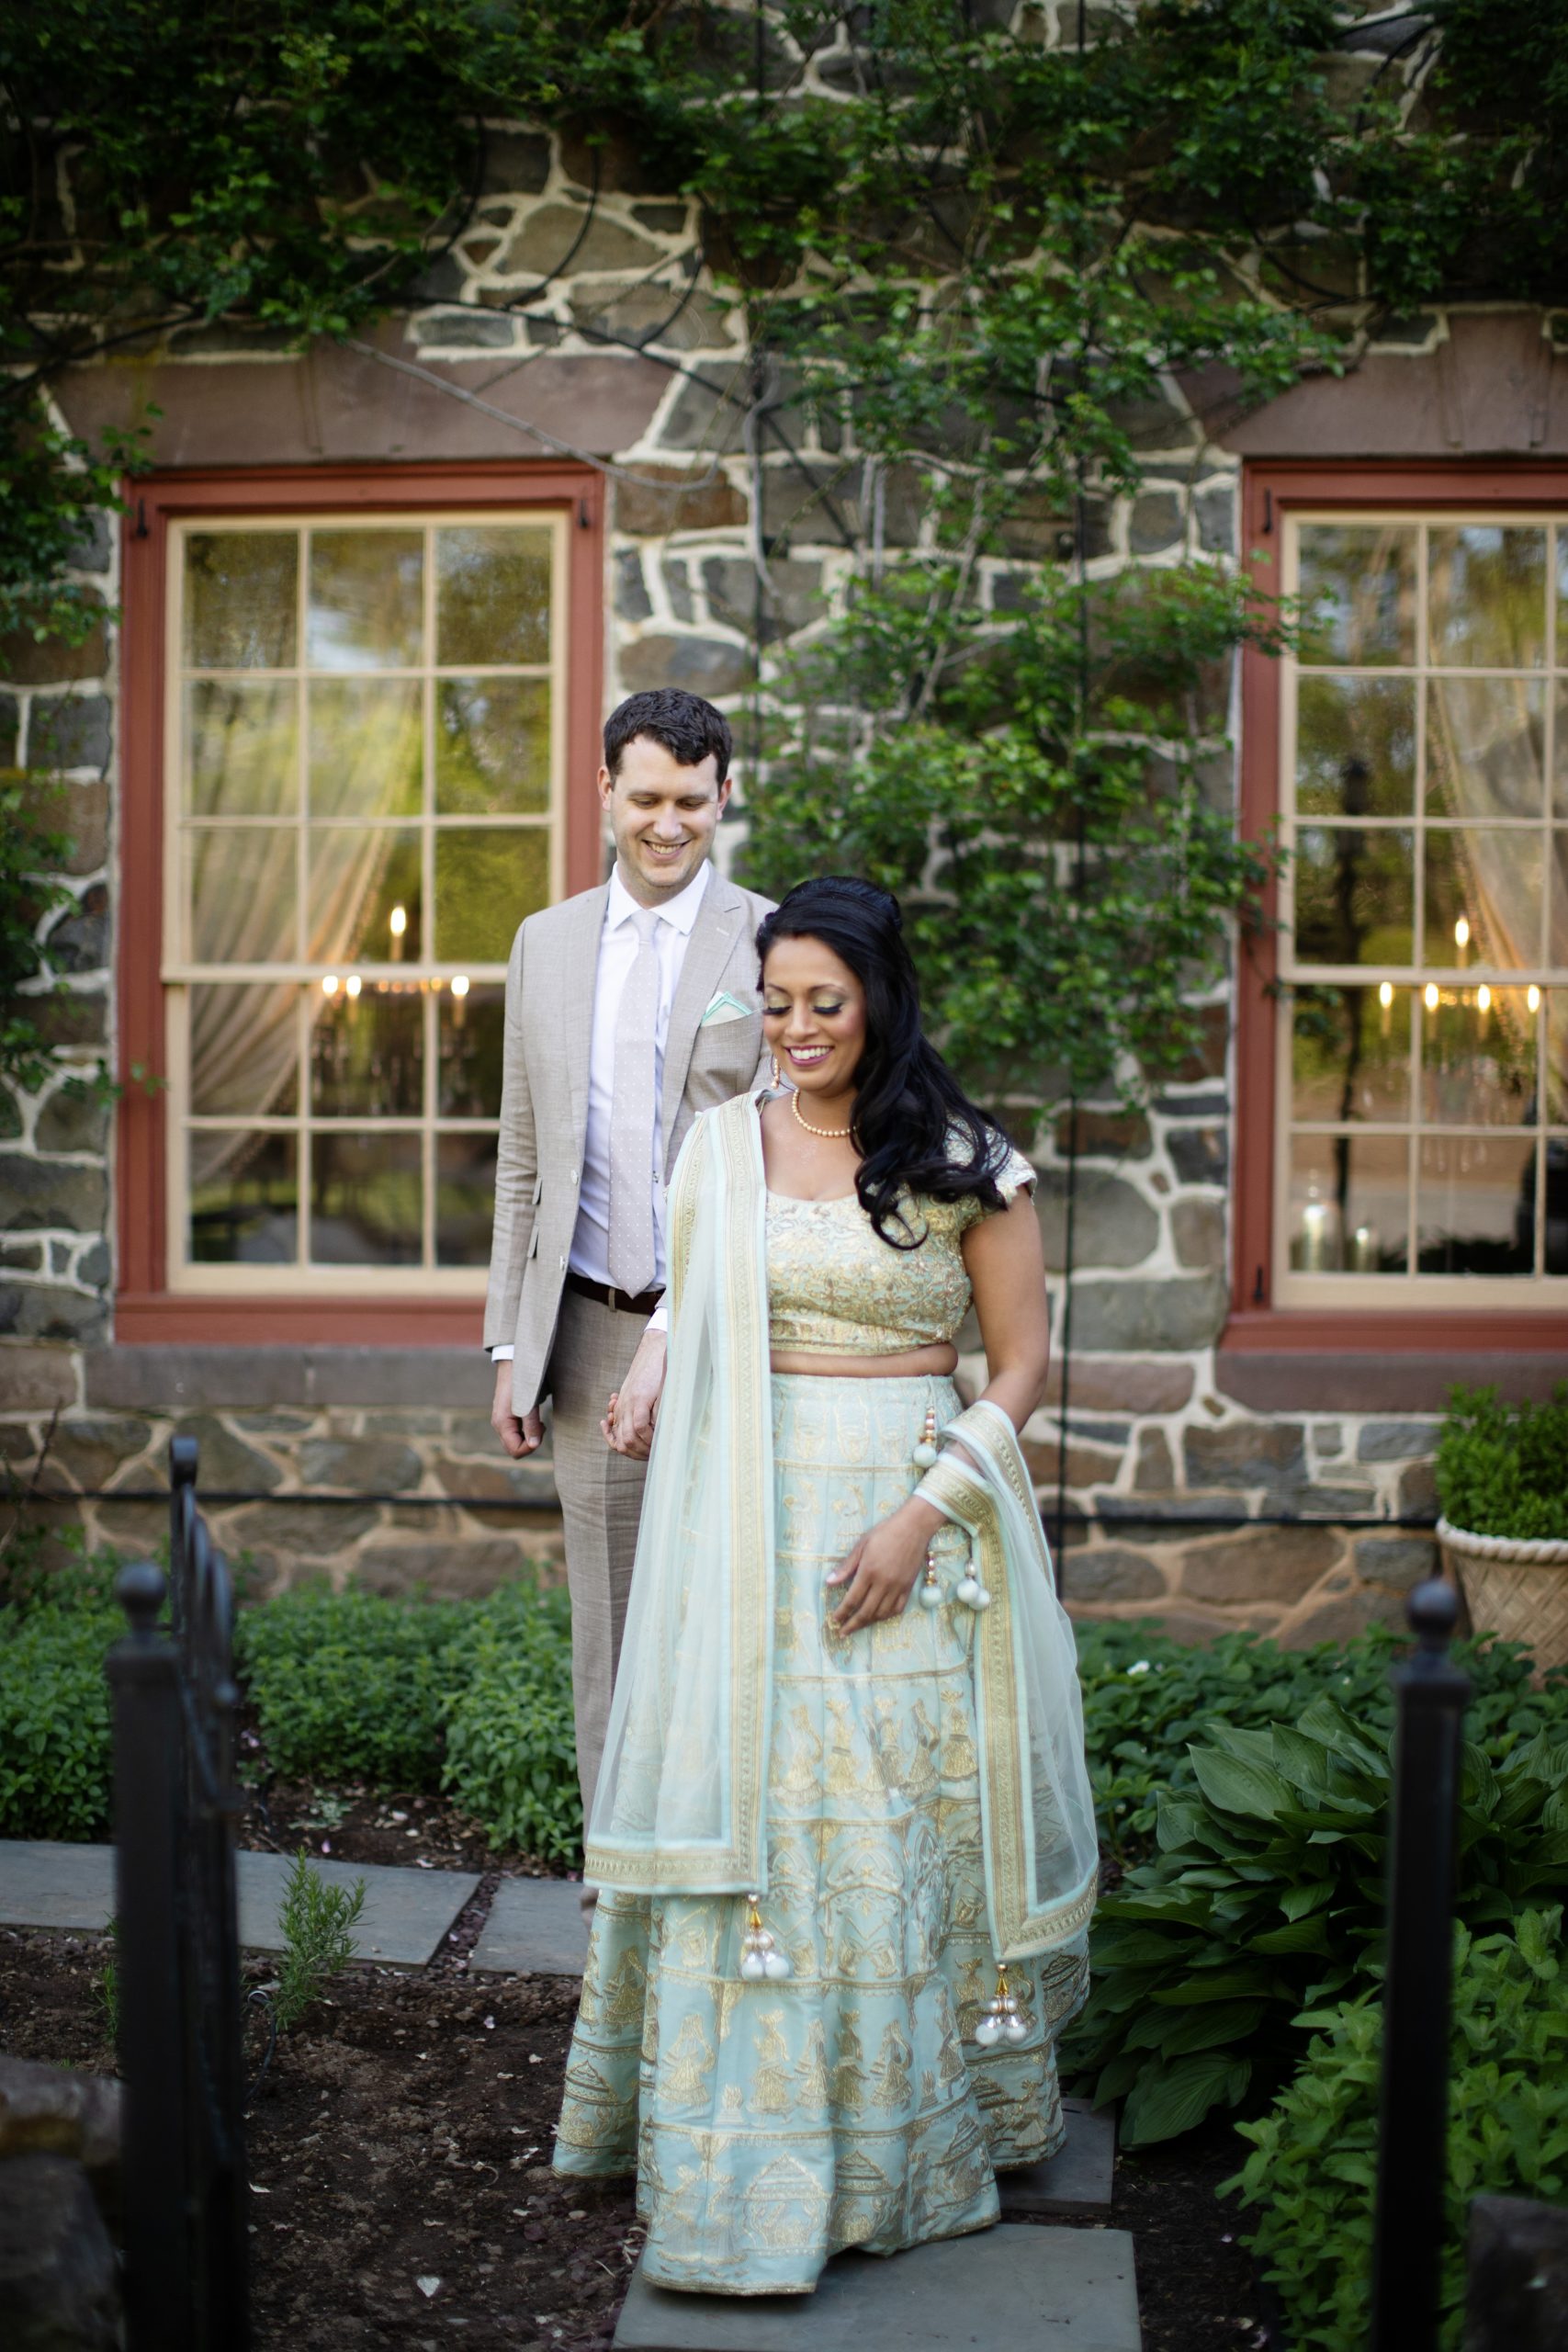 Moonstone Manor, Lancaster PA Wedding. Destination Micro Wedding captured by Philadelphia Wedding Photographers Janae Rose Photography